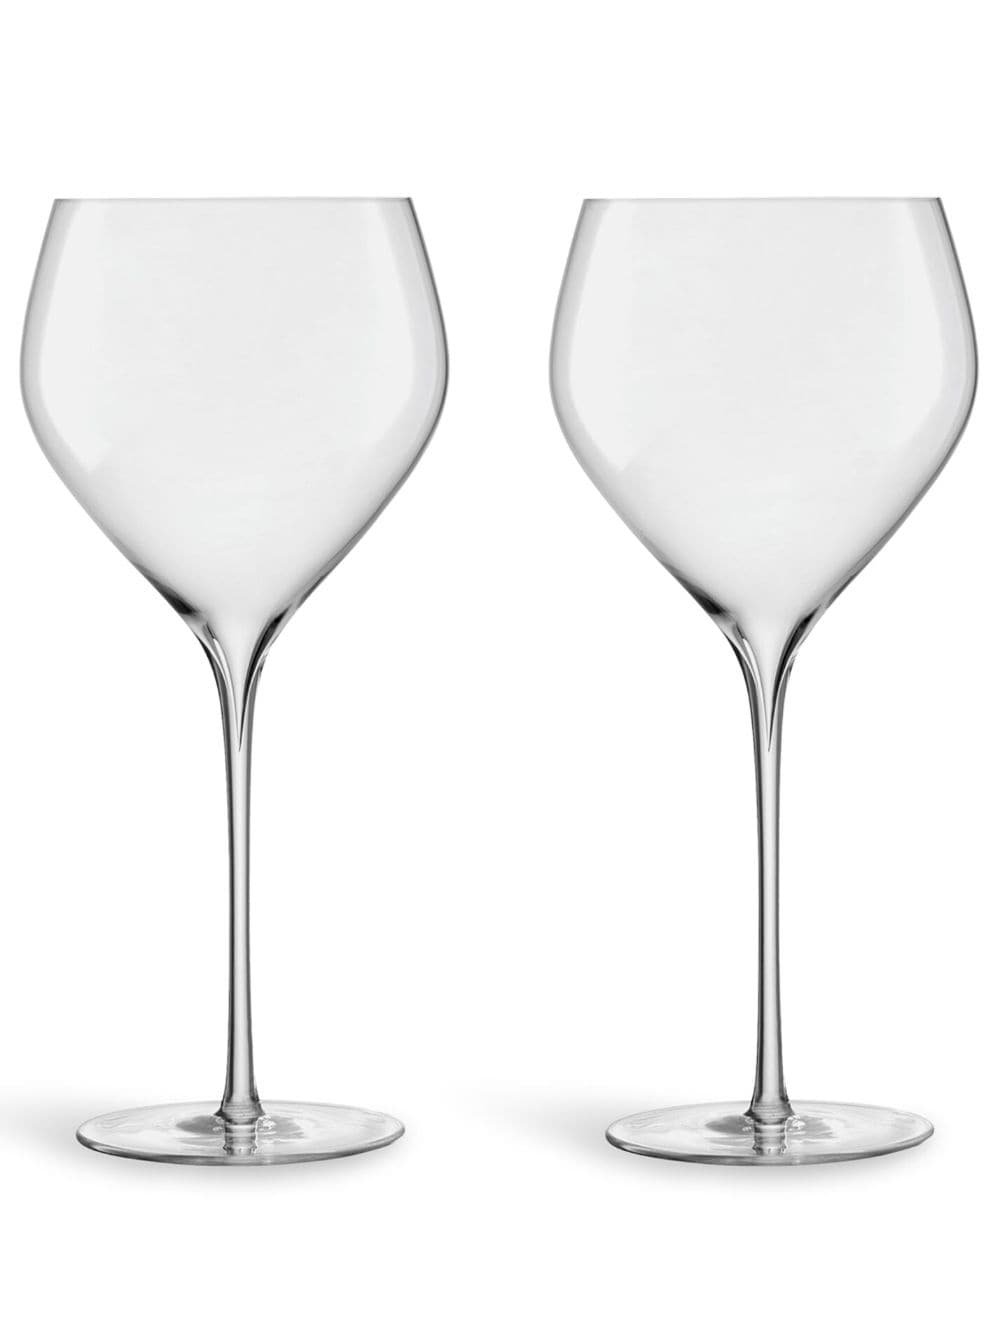 Lsa International Savoy Wine Glass Set In Clear